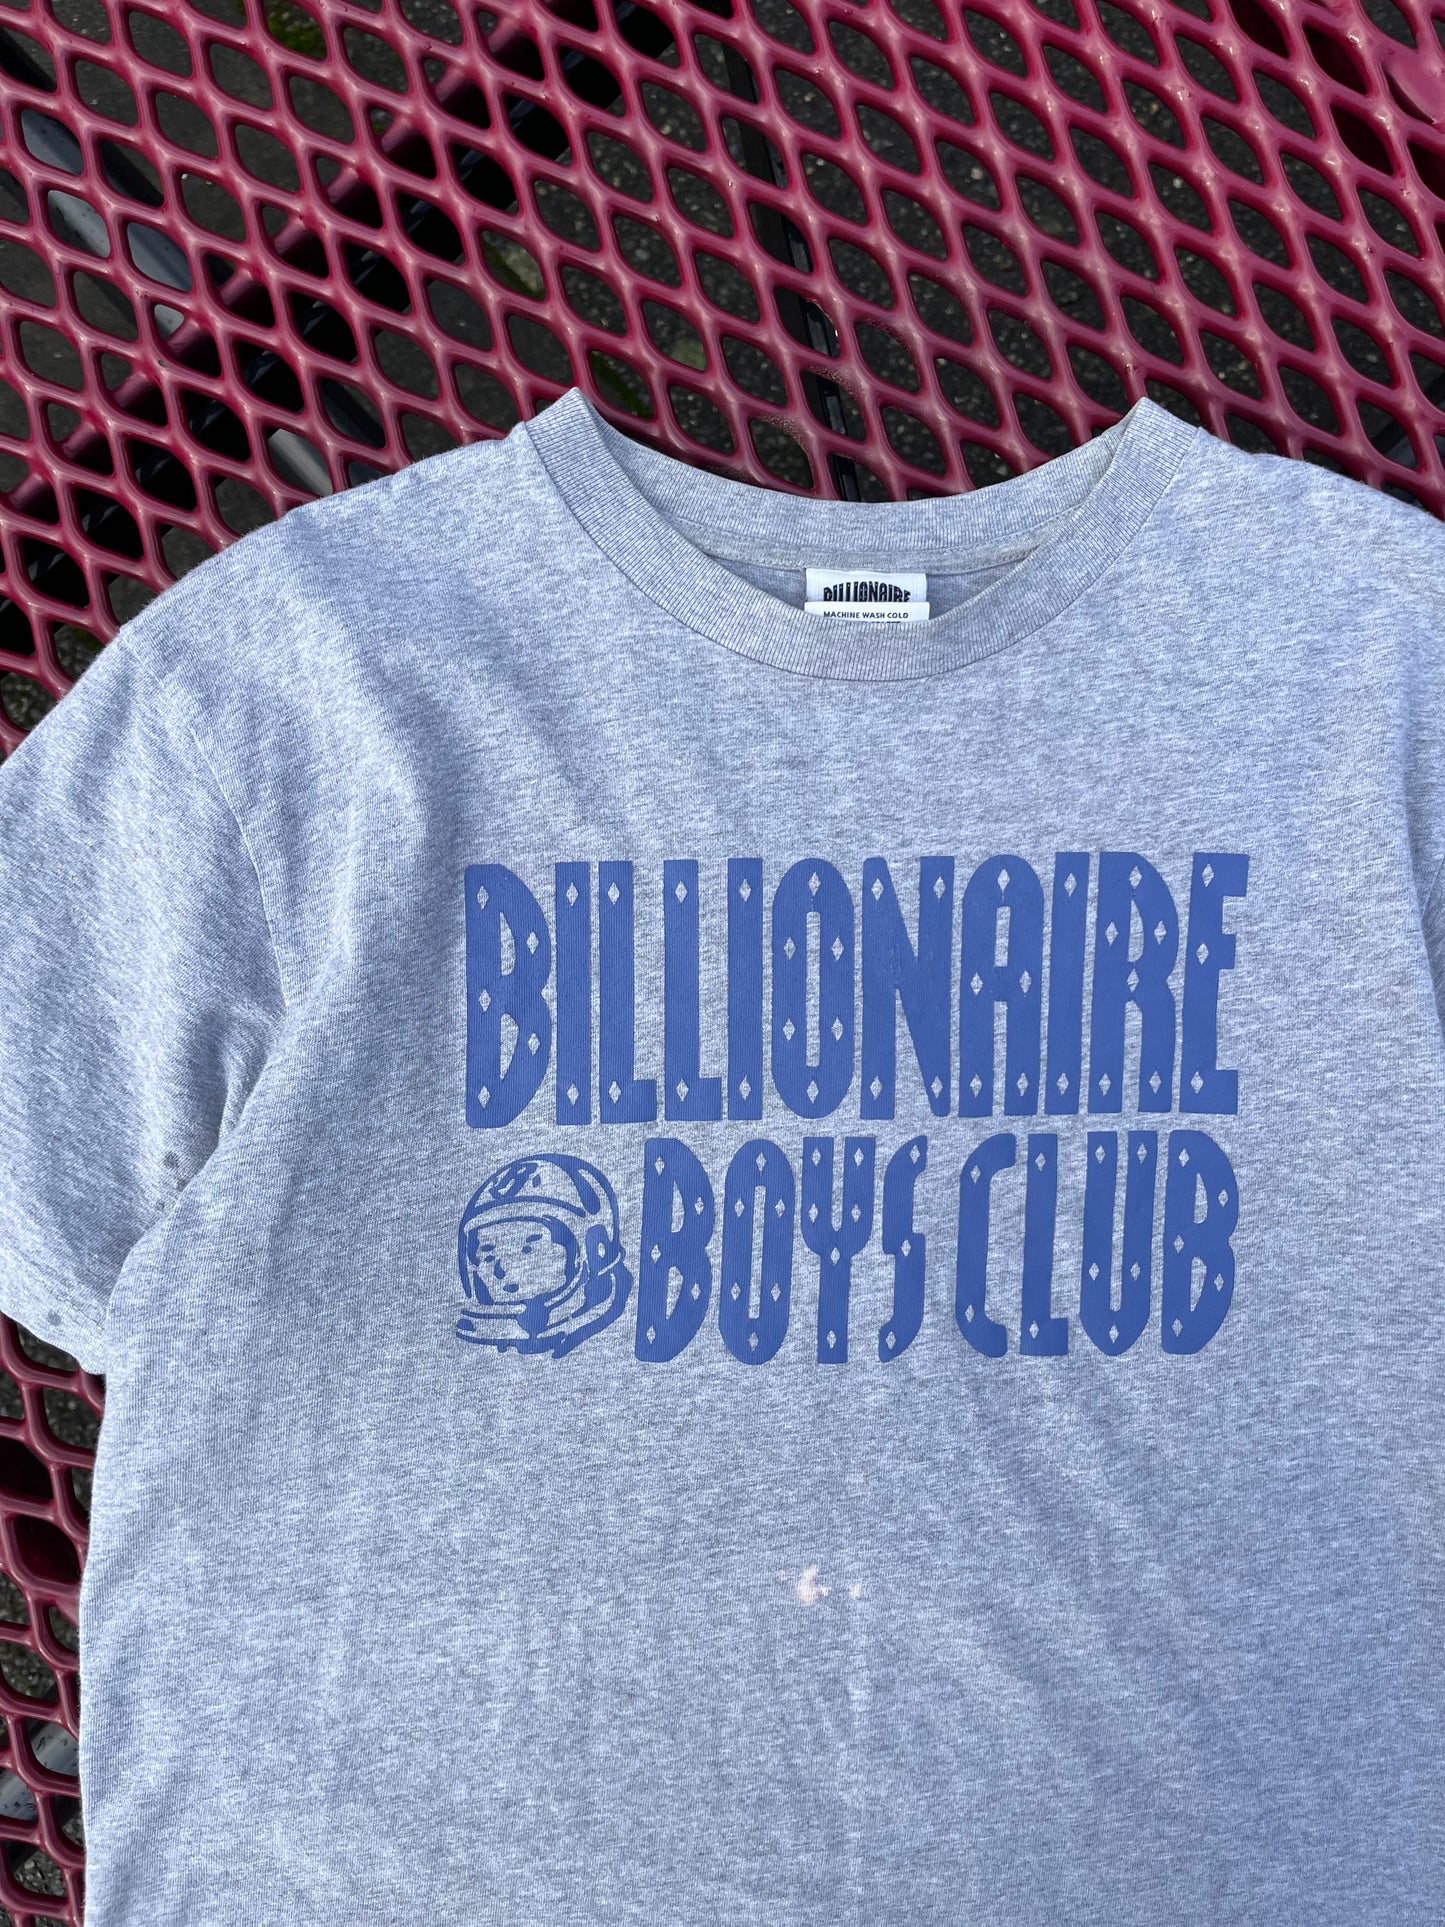 (M) 00s Billionaire Boys Club Tee